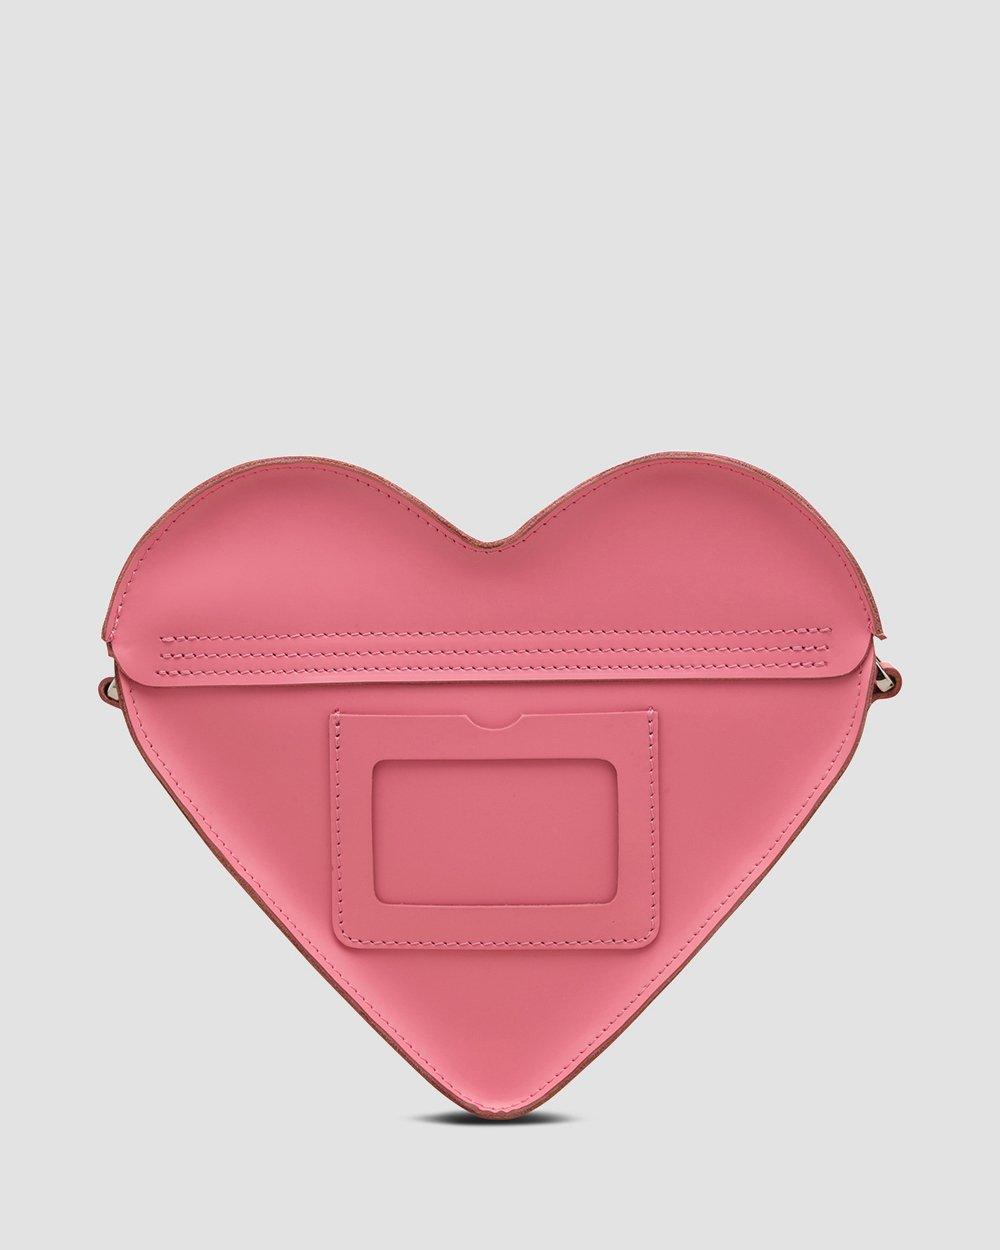 Dr. Martens 2019 Valentine's Limited Heart Bag Pink embroidered sequins  Leather